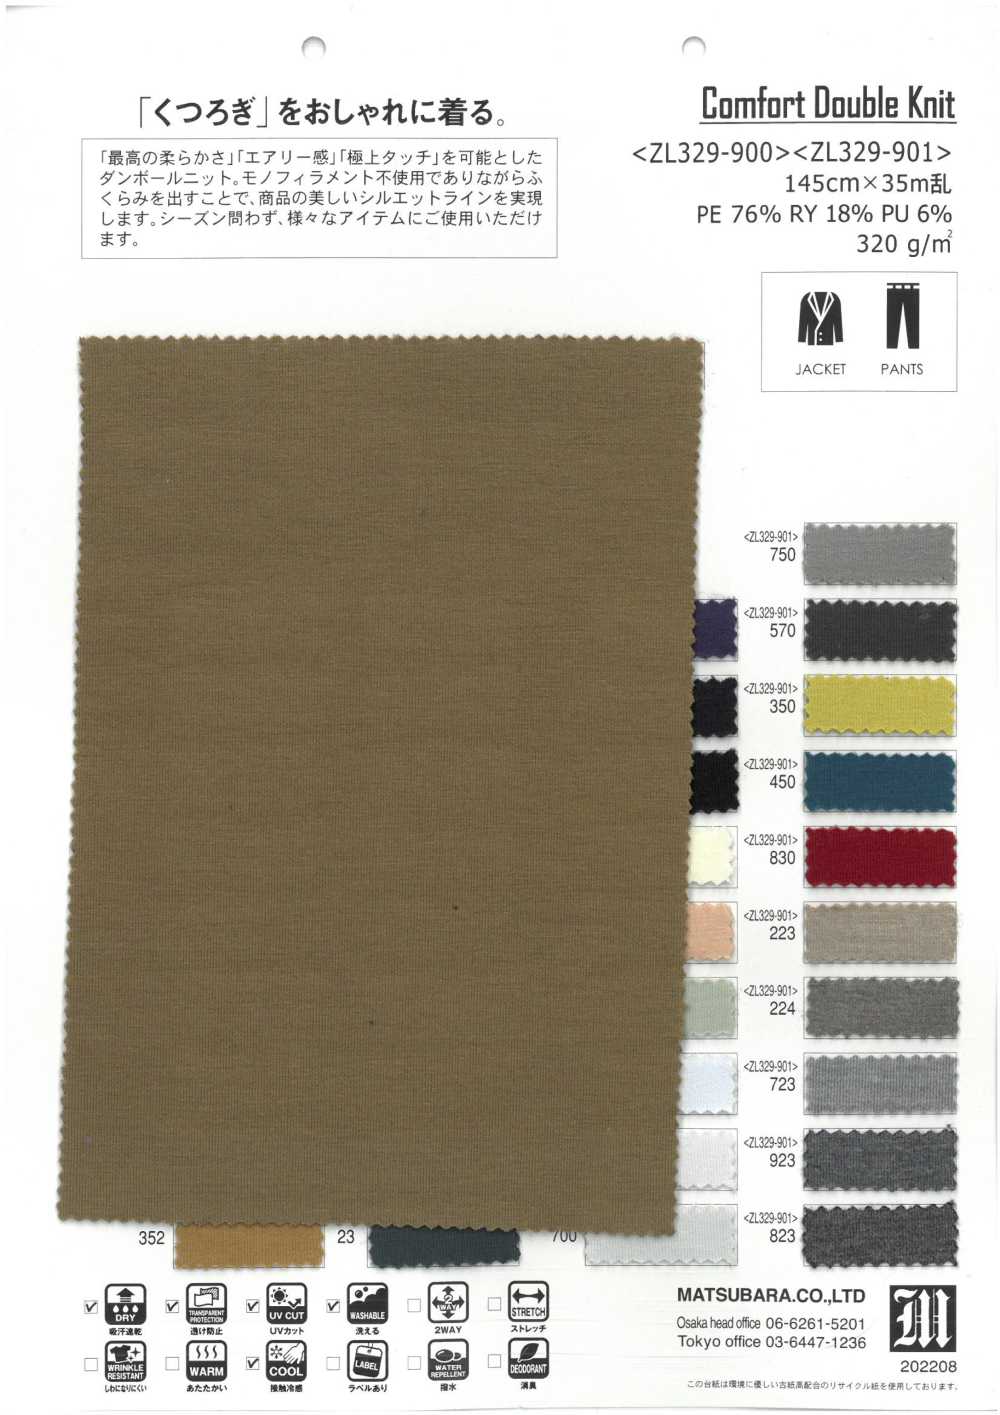 ZL329-901 Comfort Double Knit[Textile / Fabric] Matsubara